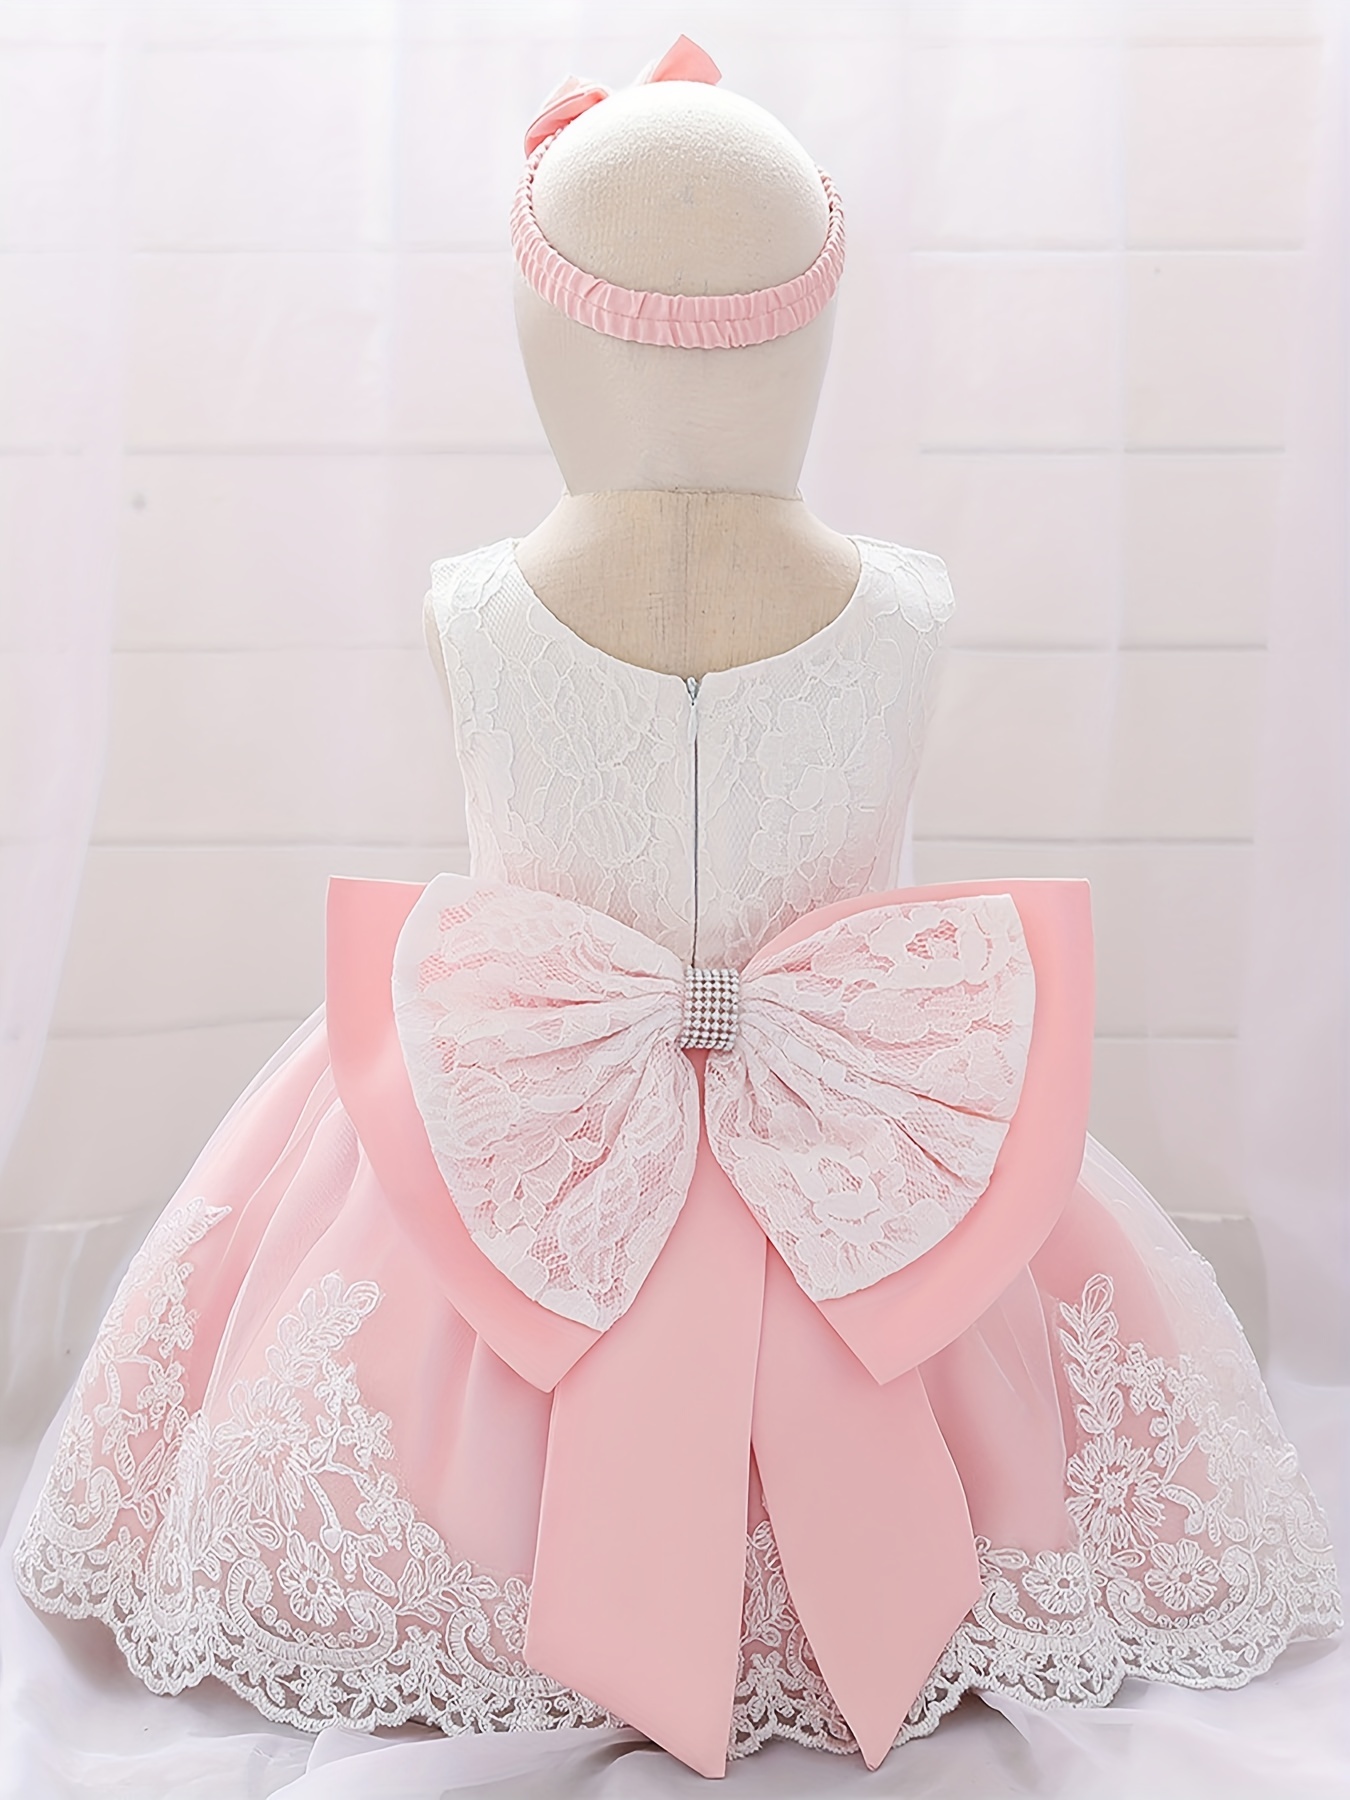 SBYOJLPB Kids Dress Girls Sleeveless Princess Dress Bow Tie Lace